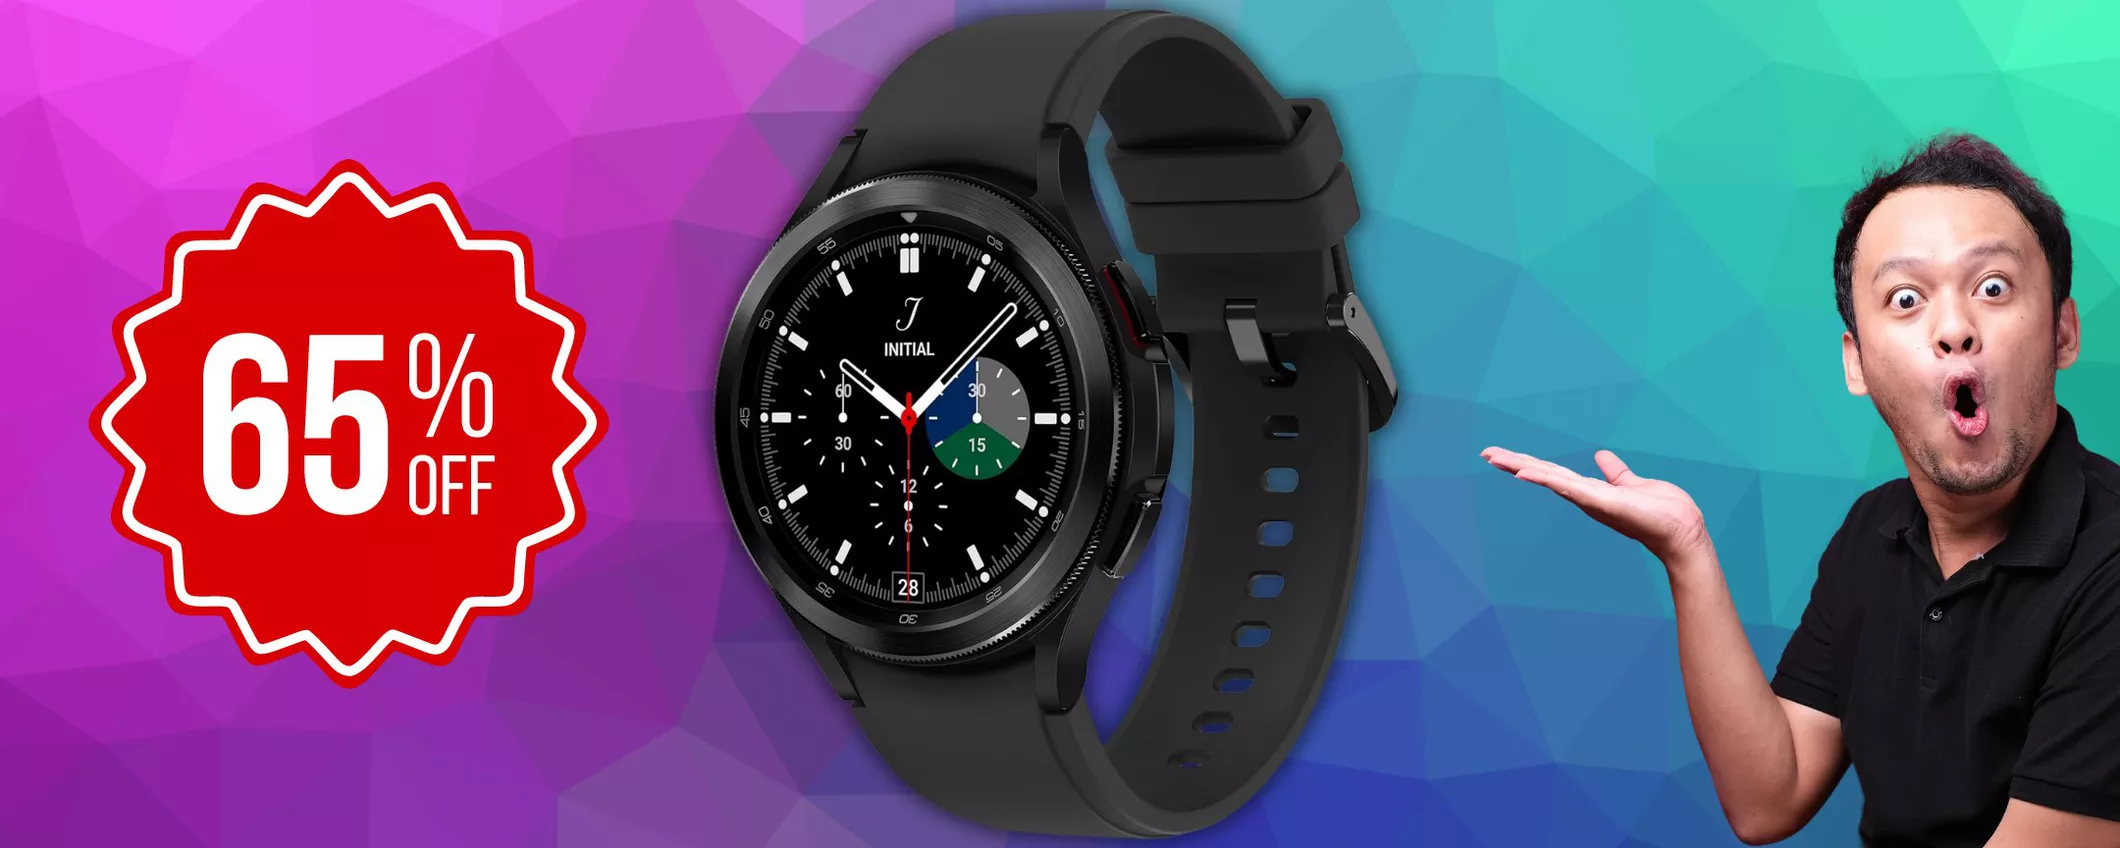 Samsung Galaxy Watch4: SCONTO FOLLE su Amazon (-63%)